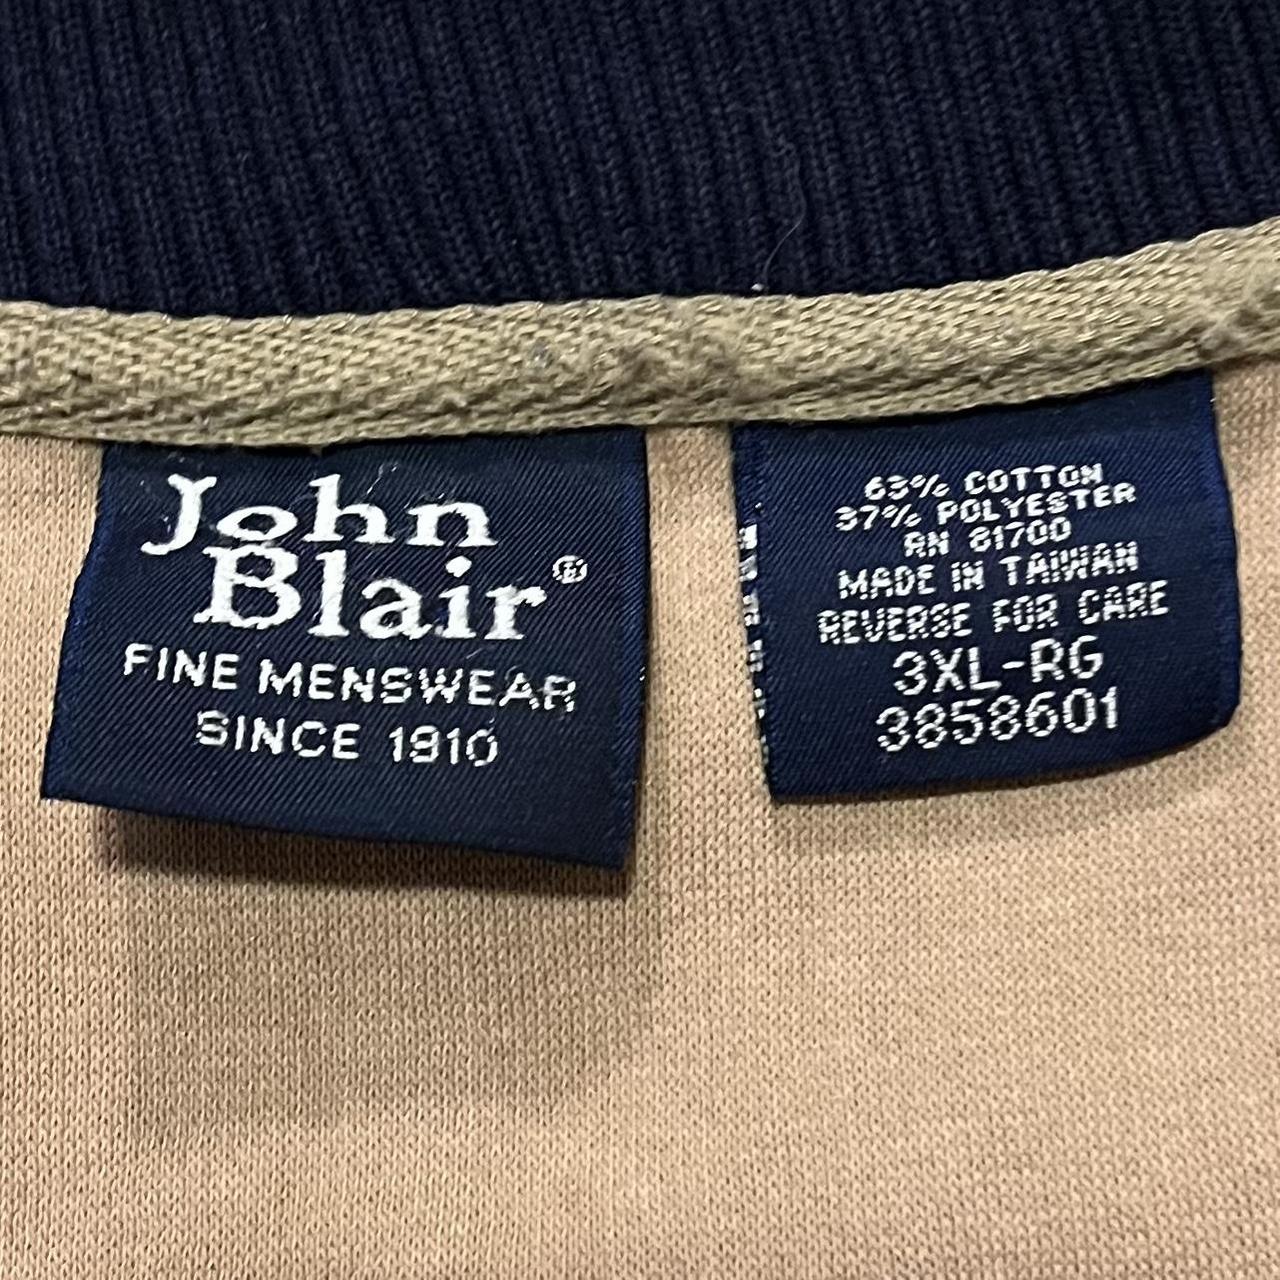 Blair Men's Blue and Tan Jacket (3)